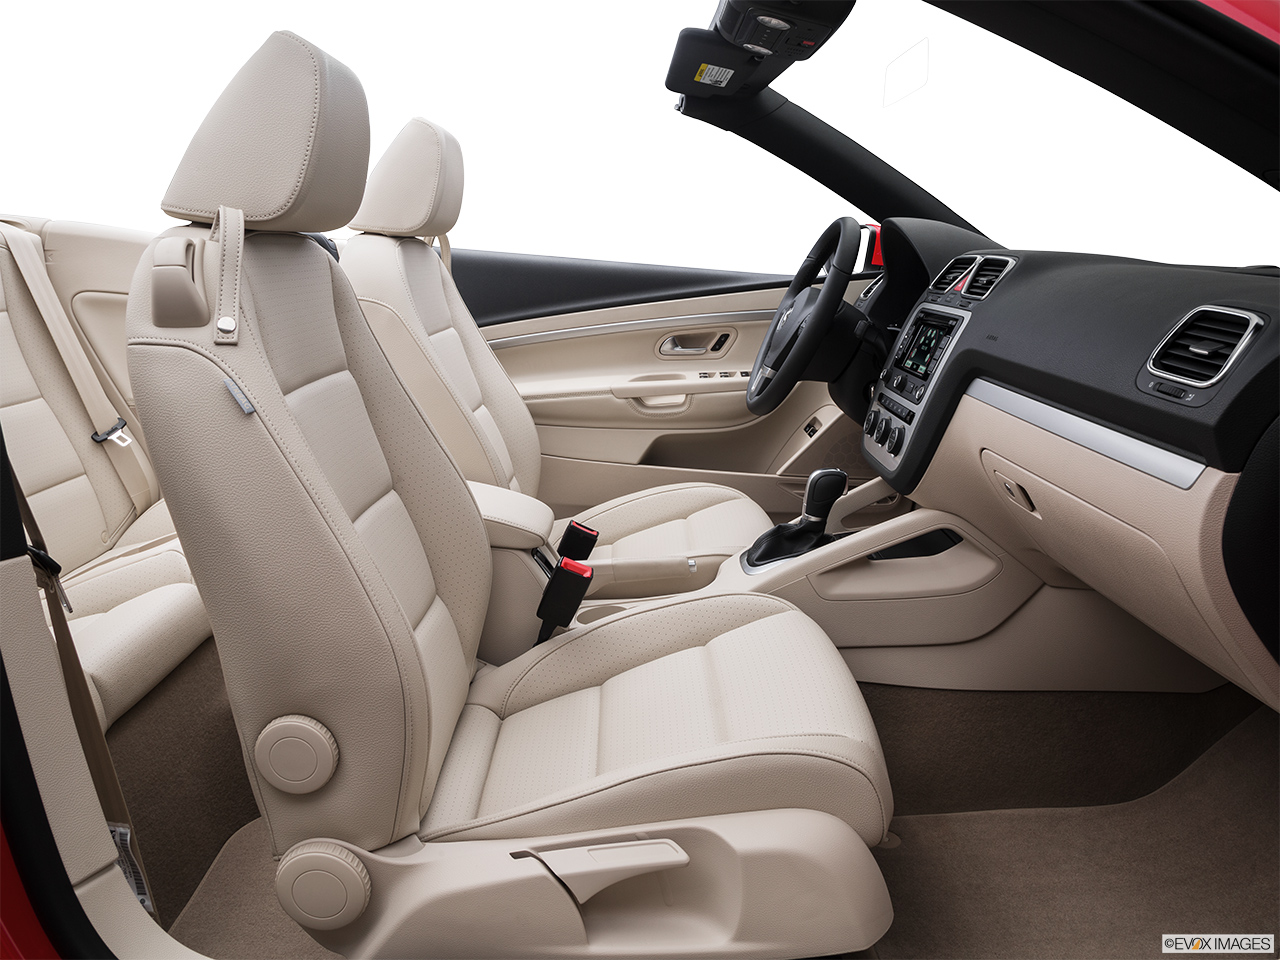 2016 Volkswagen Eos Komfort Edition Passenger seat. 